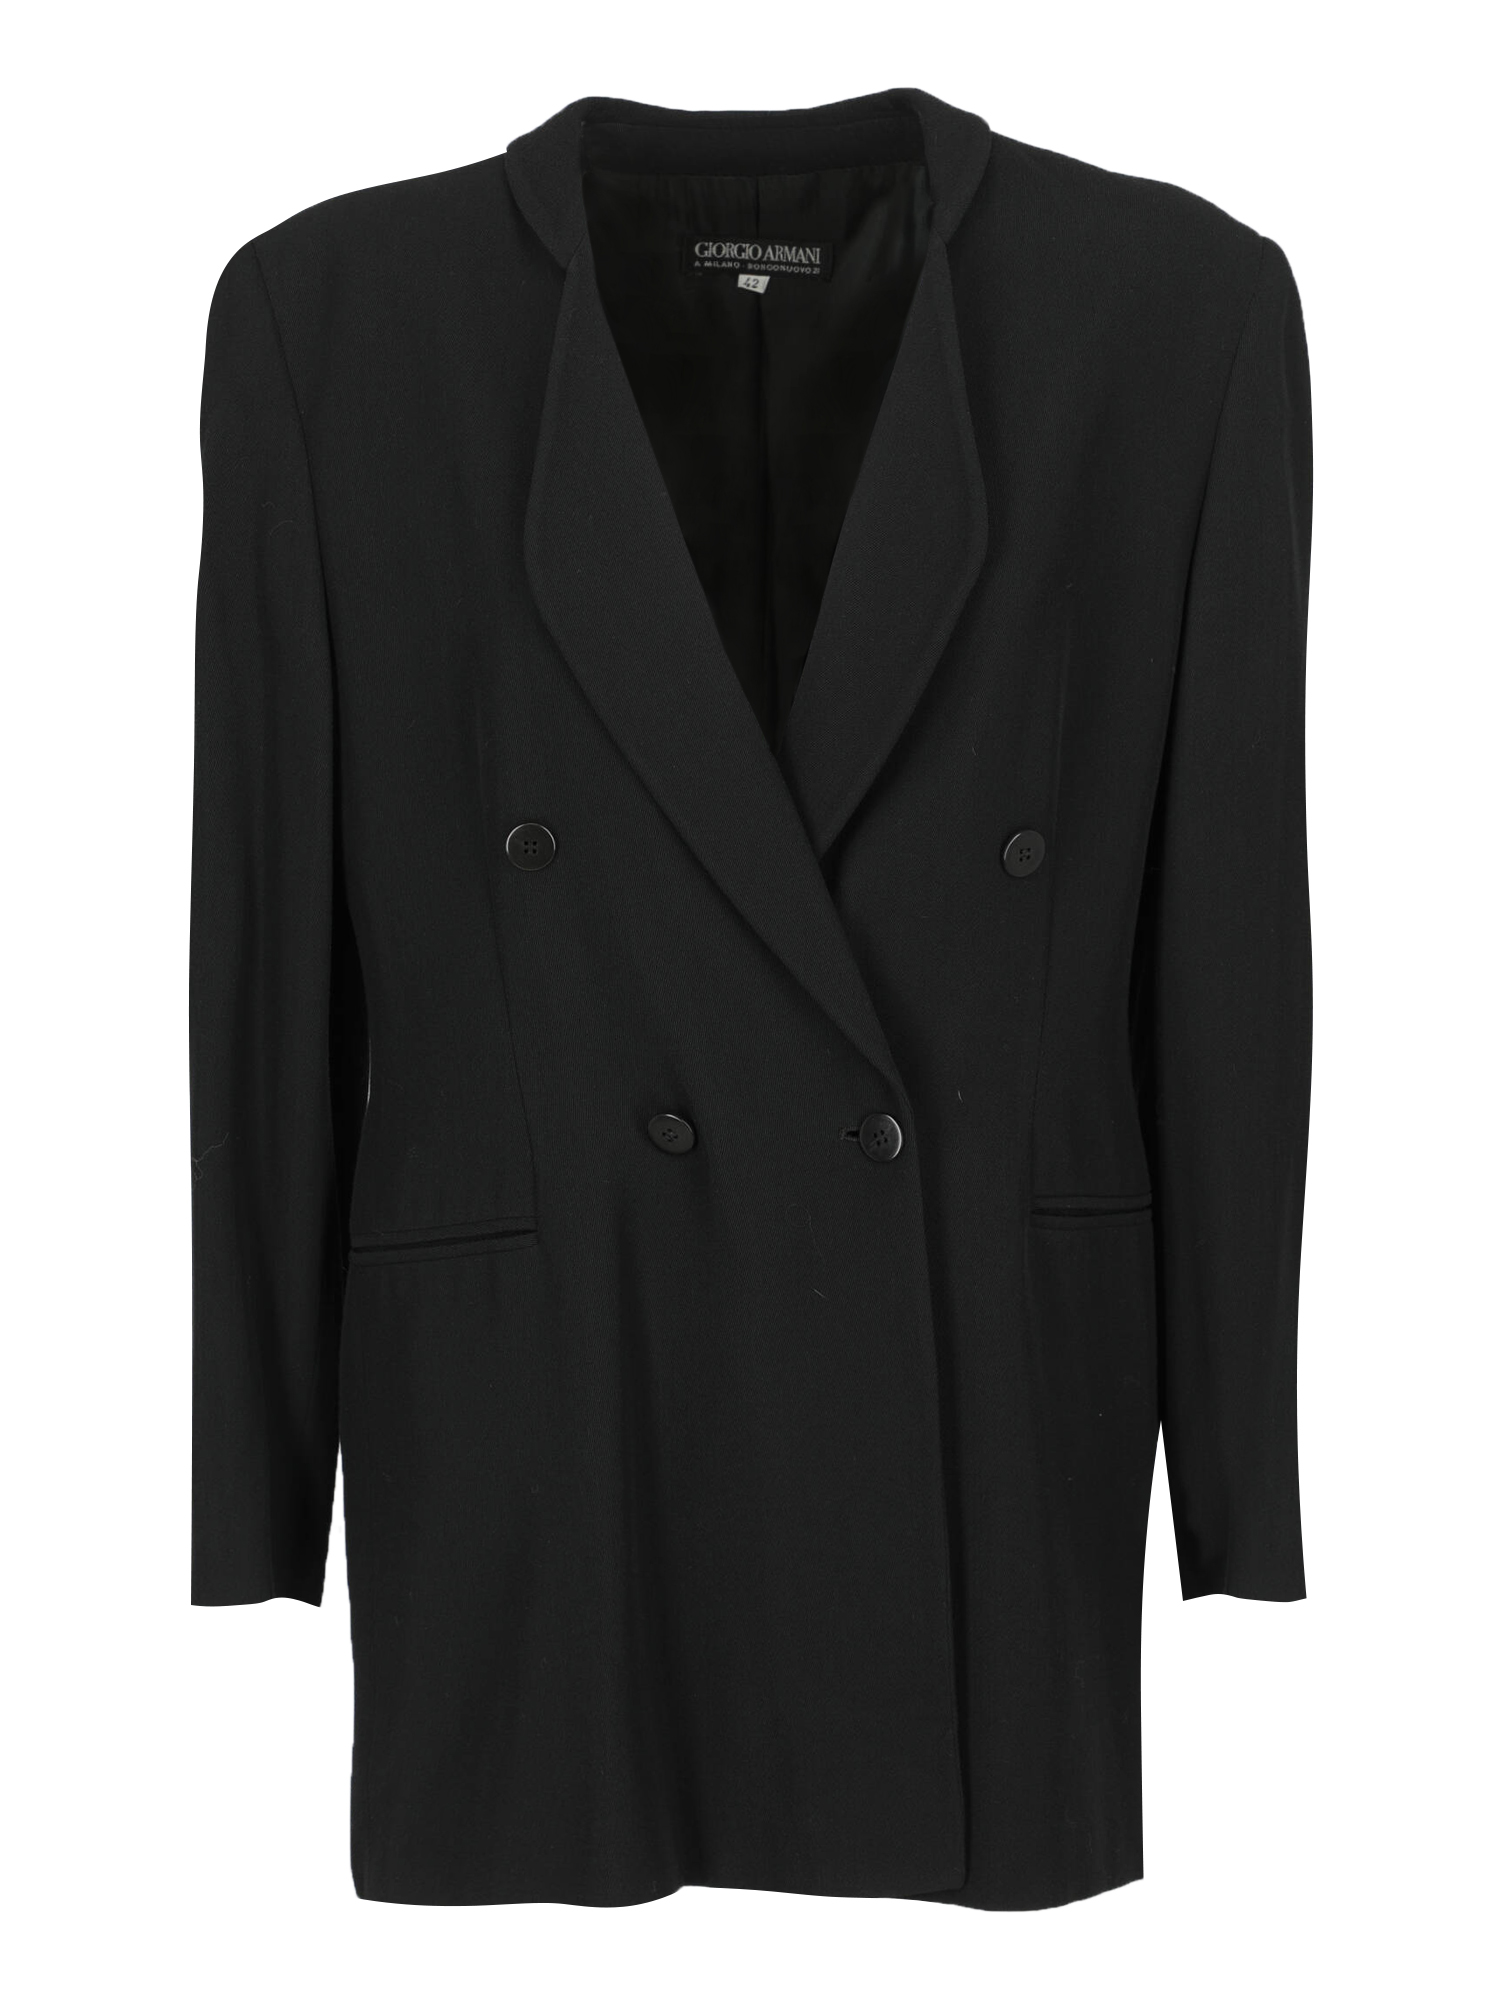 Vestes Pour Femme - Giorgio Armani - En Synthetic Fibers Black - Taille:  -